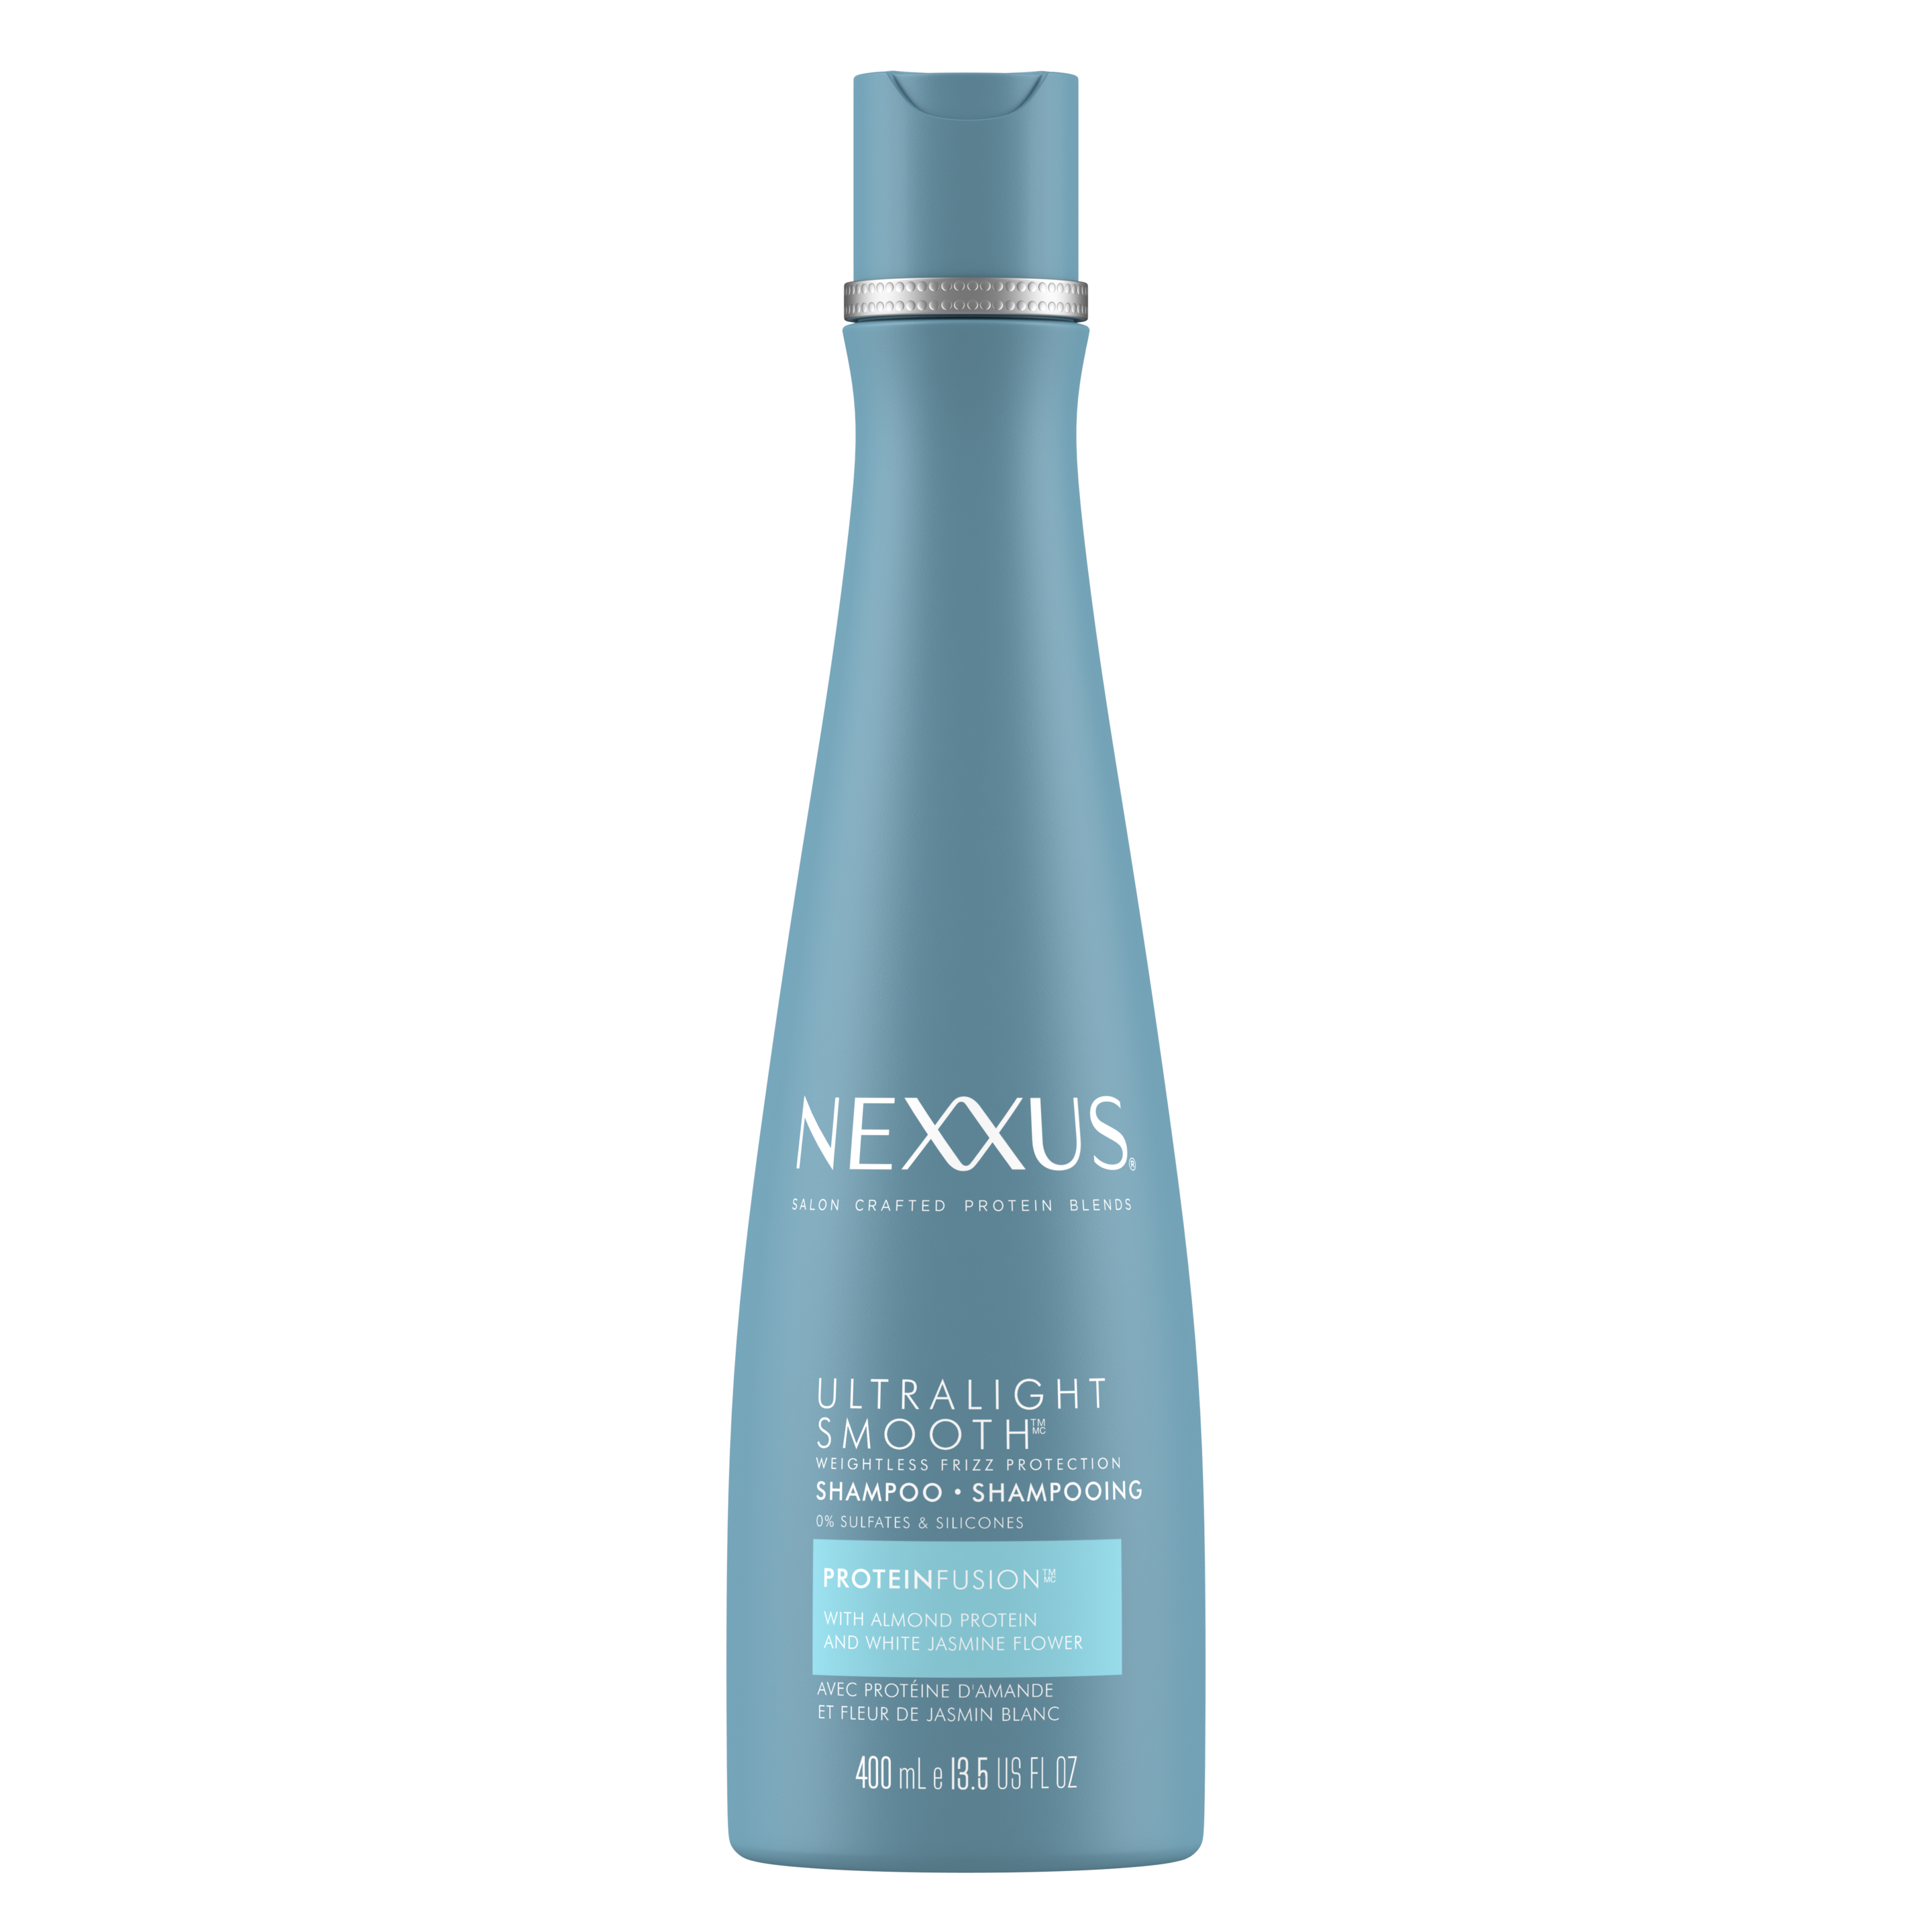 Devant de l’emballage du shampooing Nexxus Ultralight Smooth